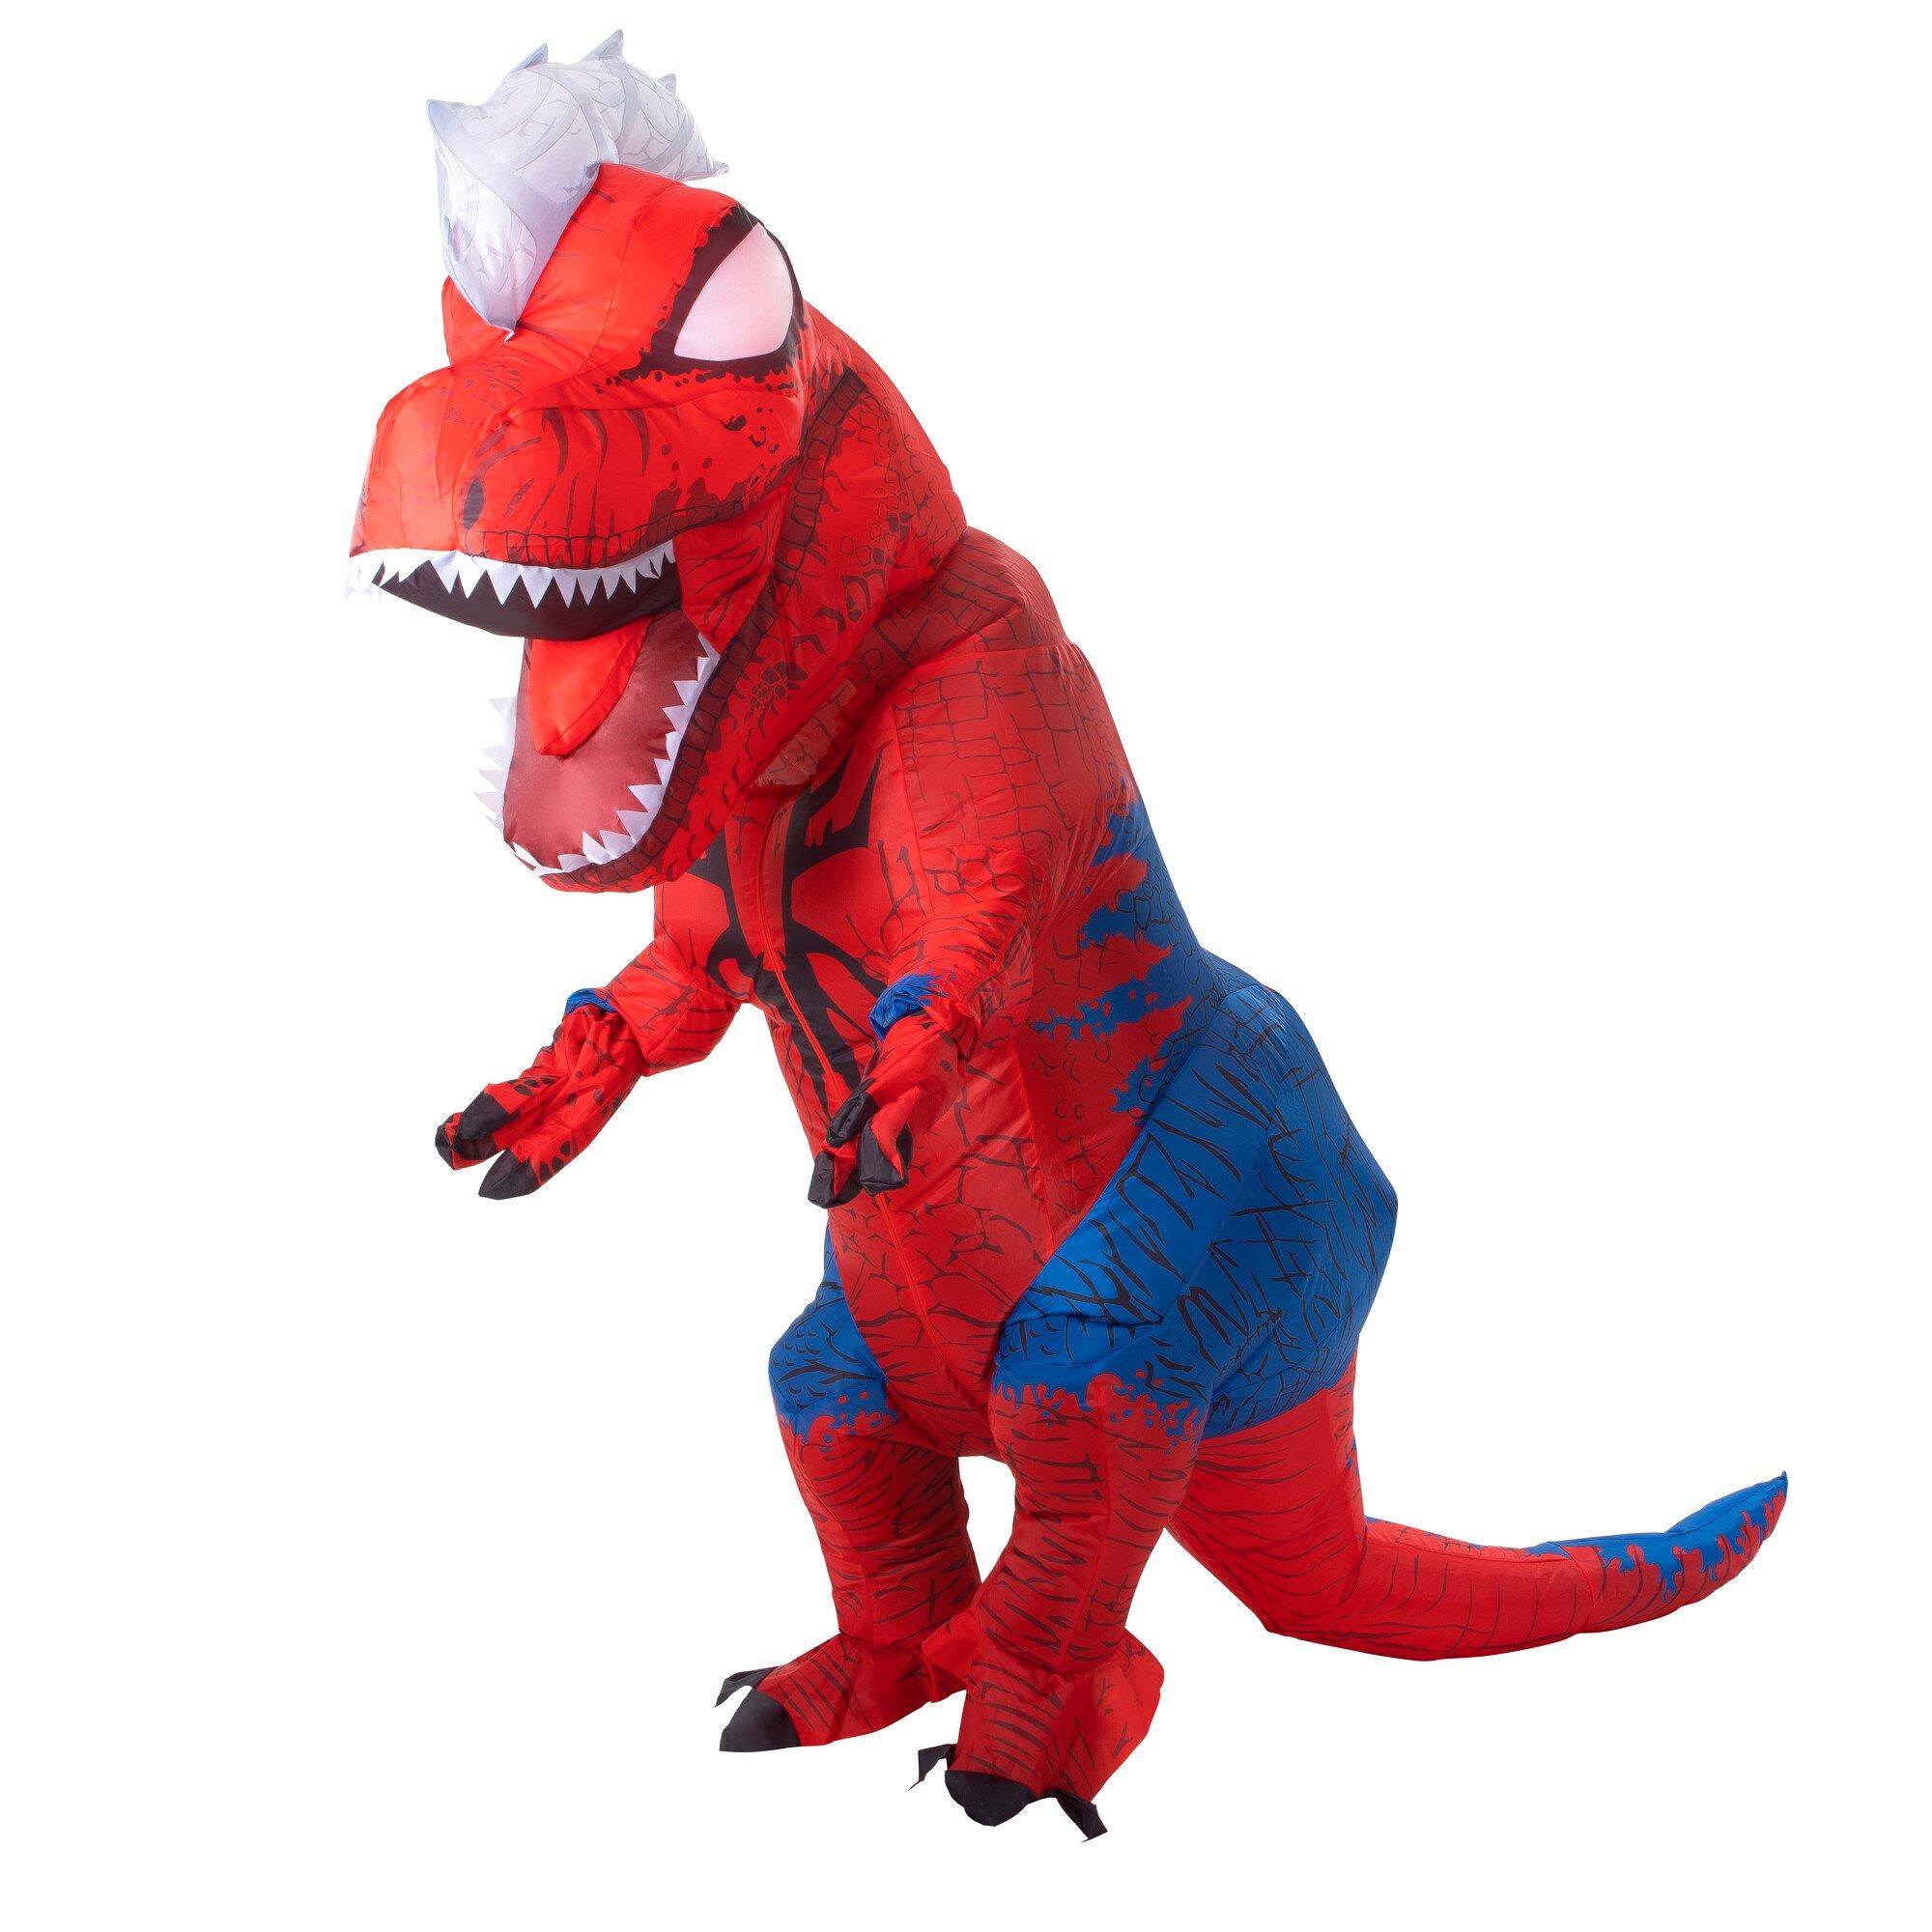 Jazwares Marvel Spider-Rex Inflatable Adult Costume